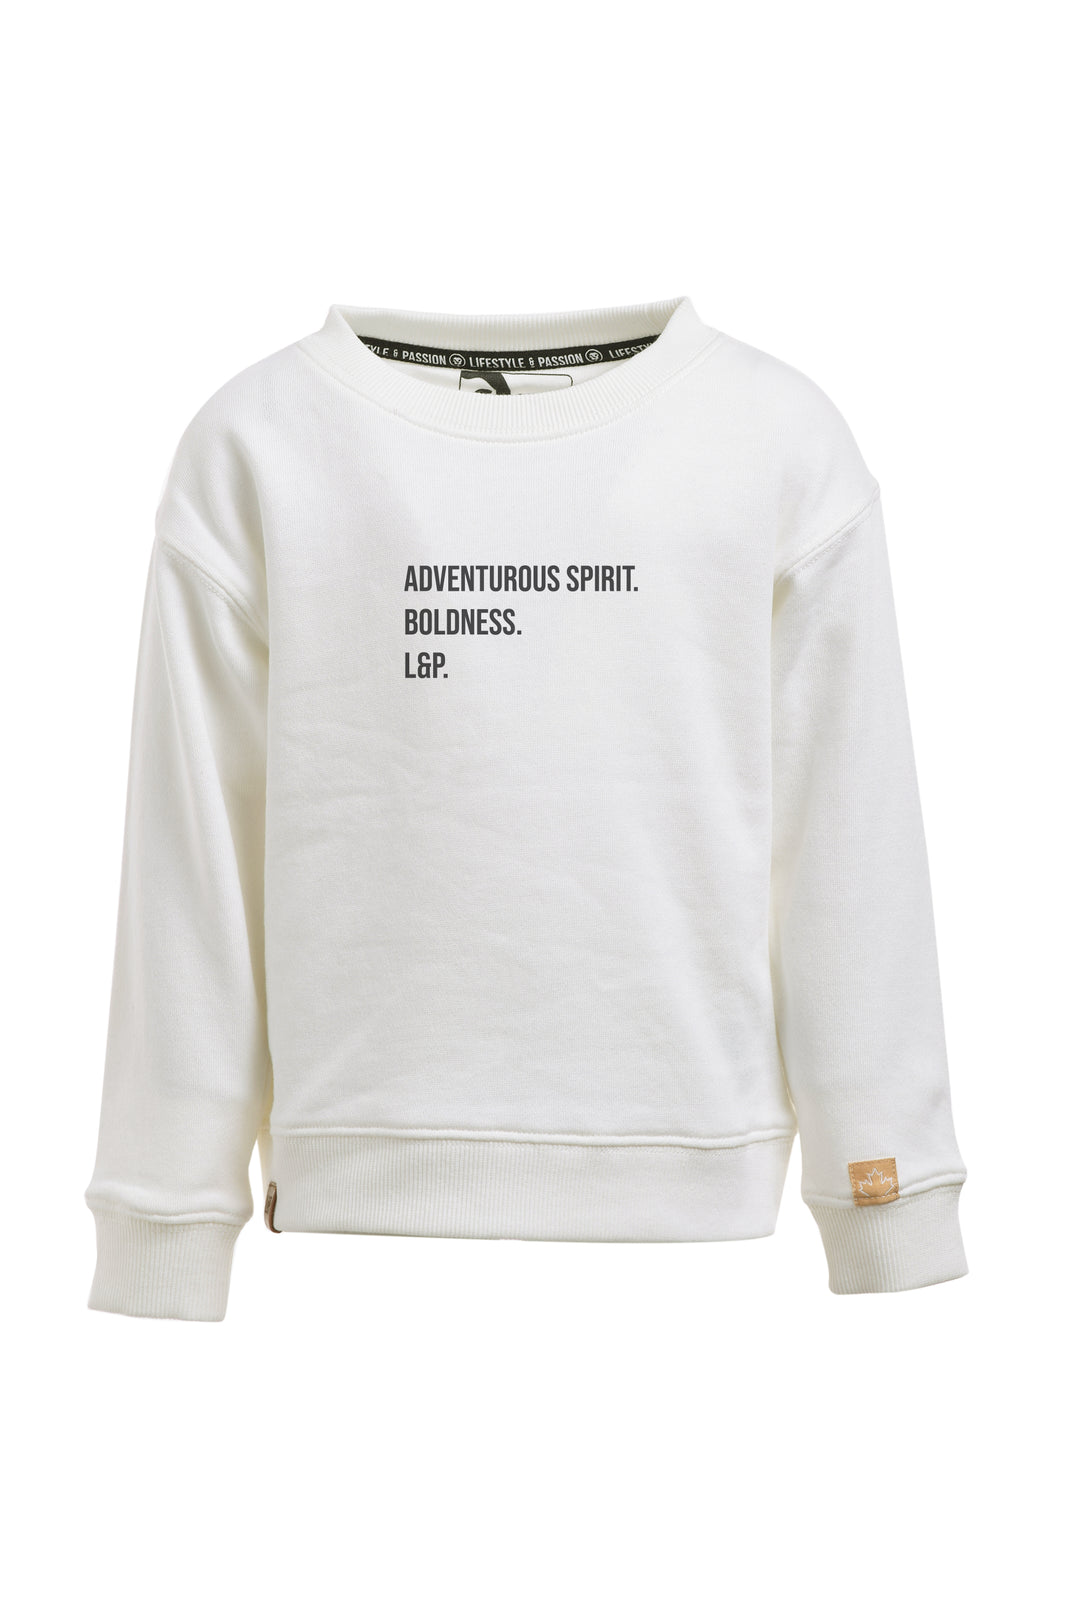 French Cotton Crewneck Sweater [Boldness] [Kids]